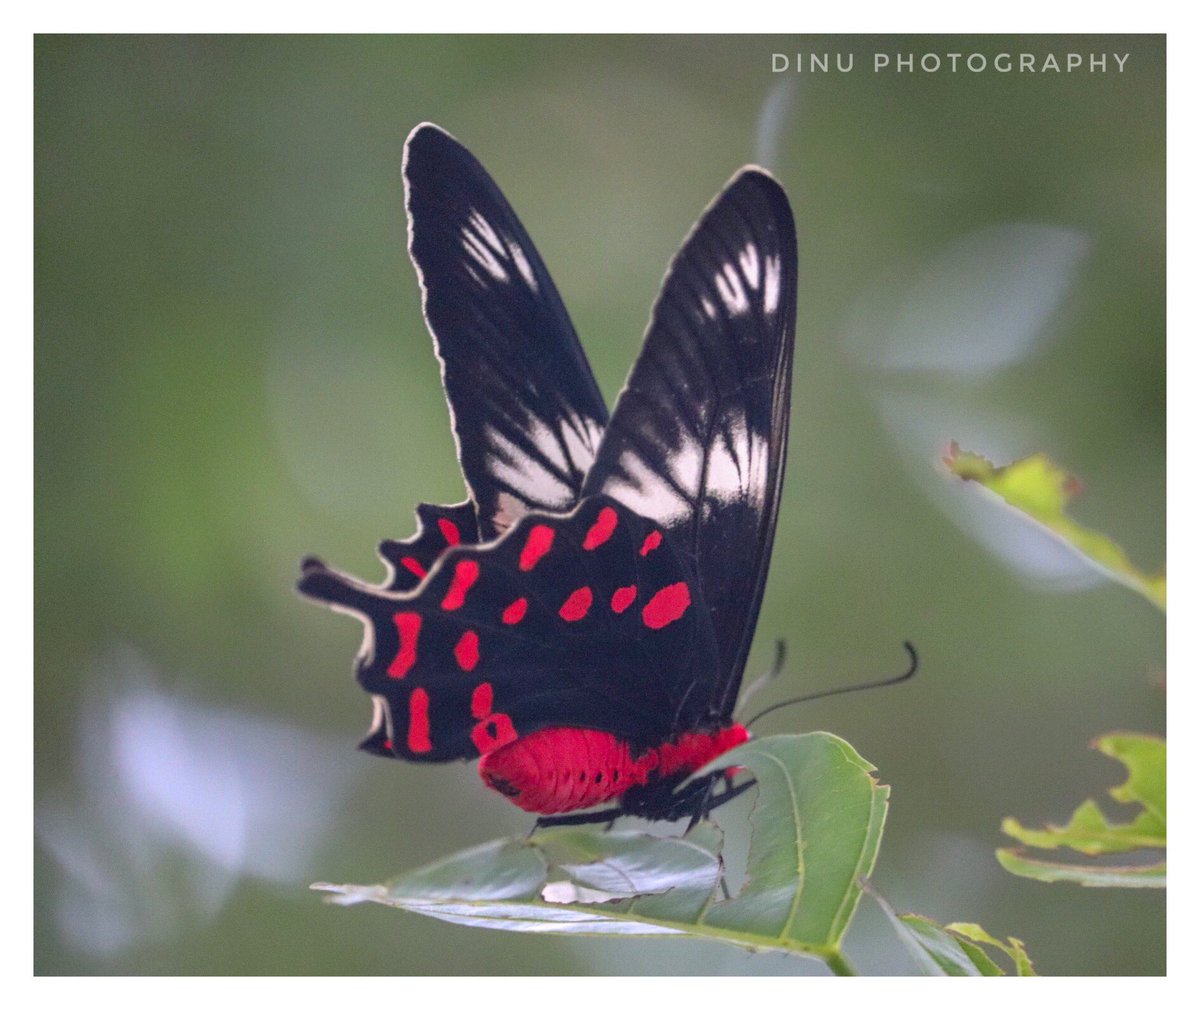 ADMK Butterfly 🦋 #DinuPhotography ✨ @CM_tamilnadu @EPSTamilNadu @CMOTamilNadu @500px @Discovery @NatGeo @NatGeoPhotos